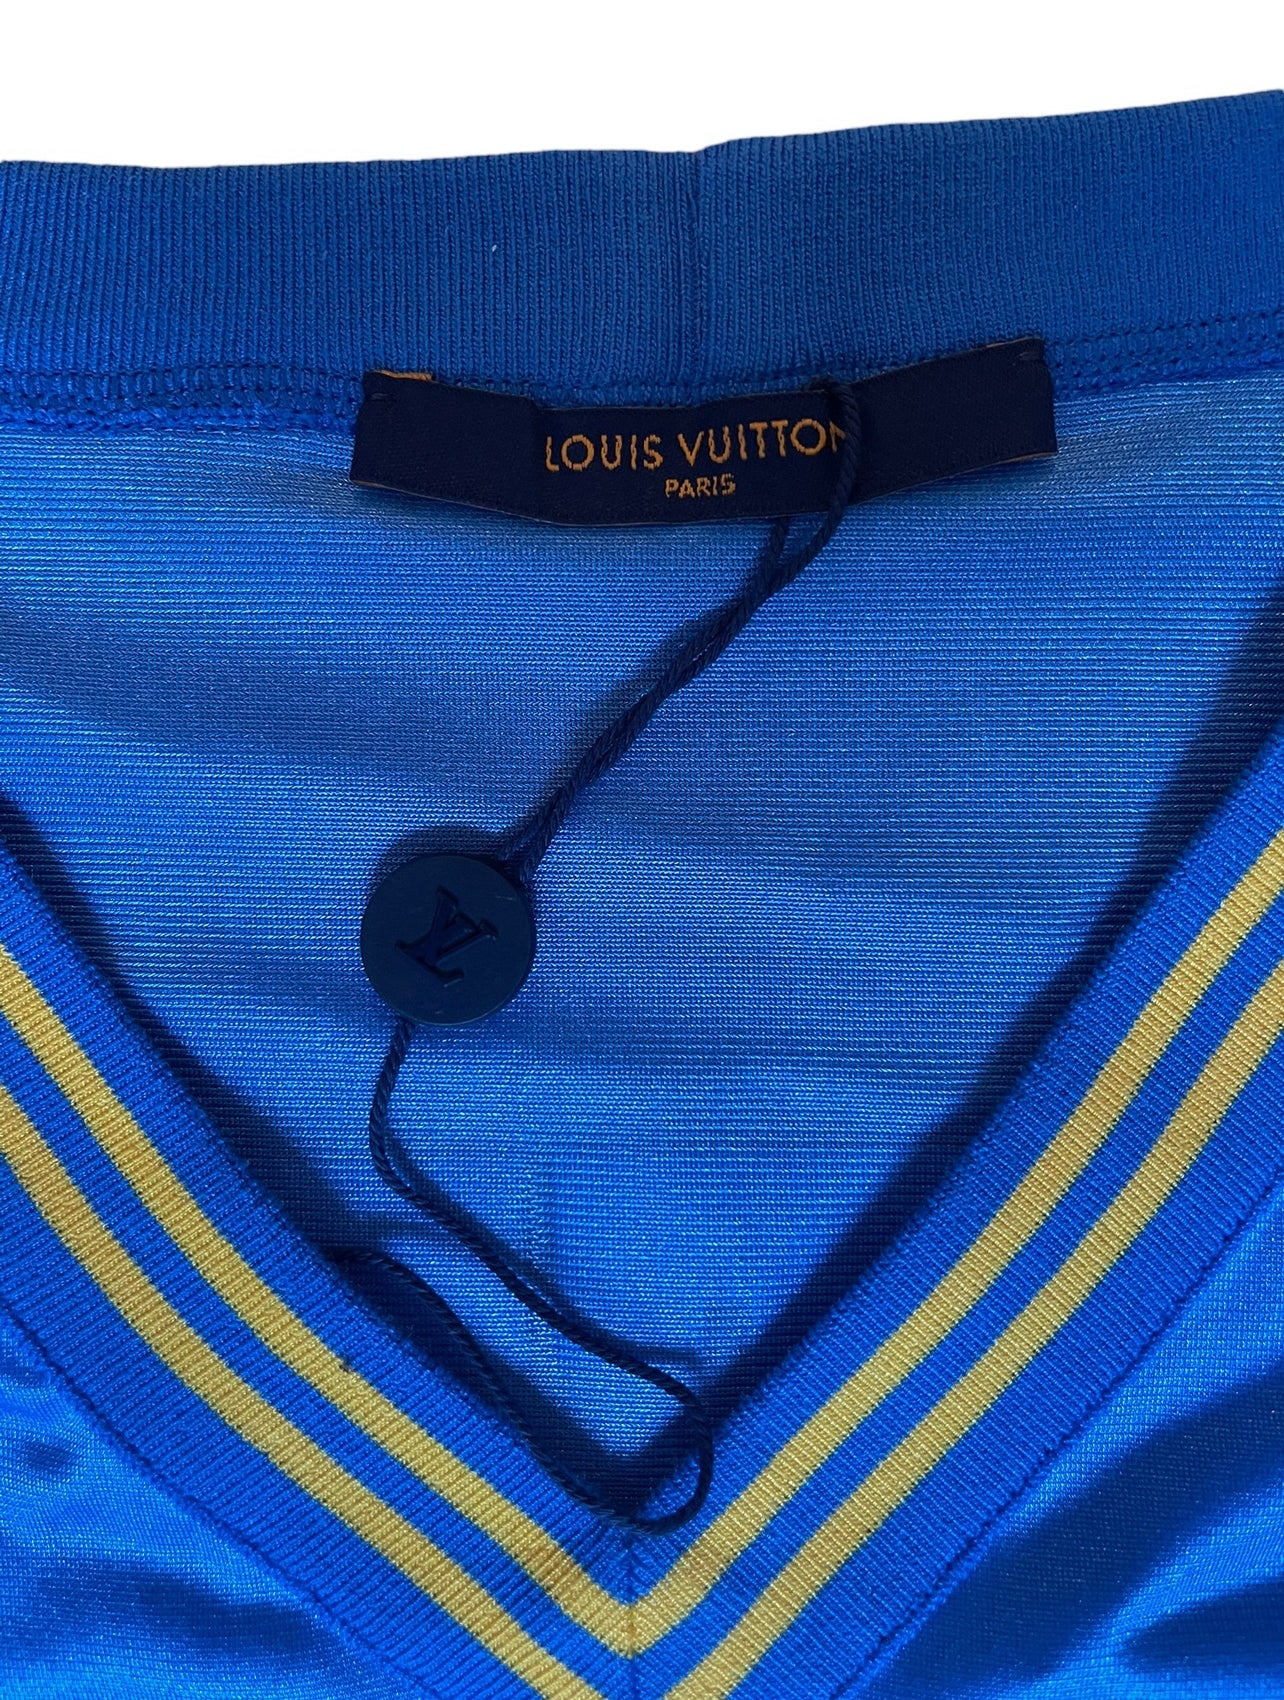 LOUIS VUITTON SPORT T-SHIRT WITH PATCH BLUE